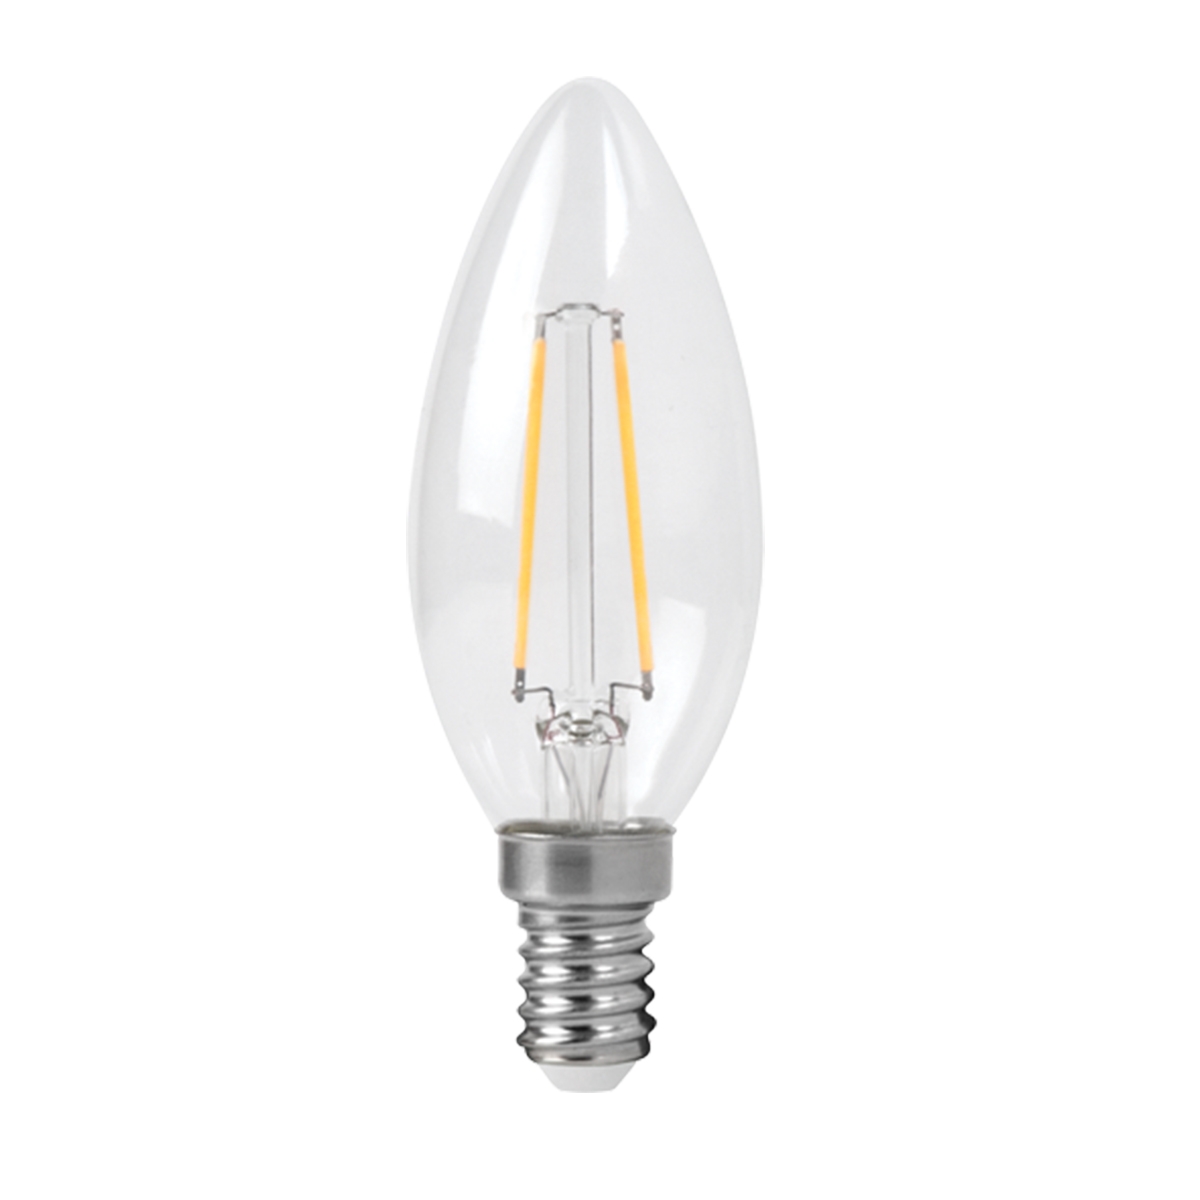 Megaman E14 LED Candle Filament Bulb Dimmable LC1404CS-4W-E14 2800K - Warm Whte